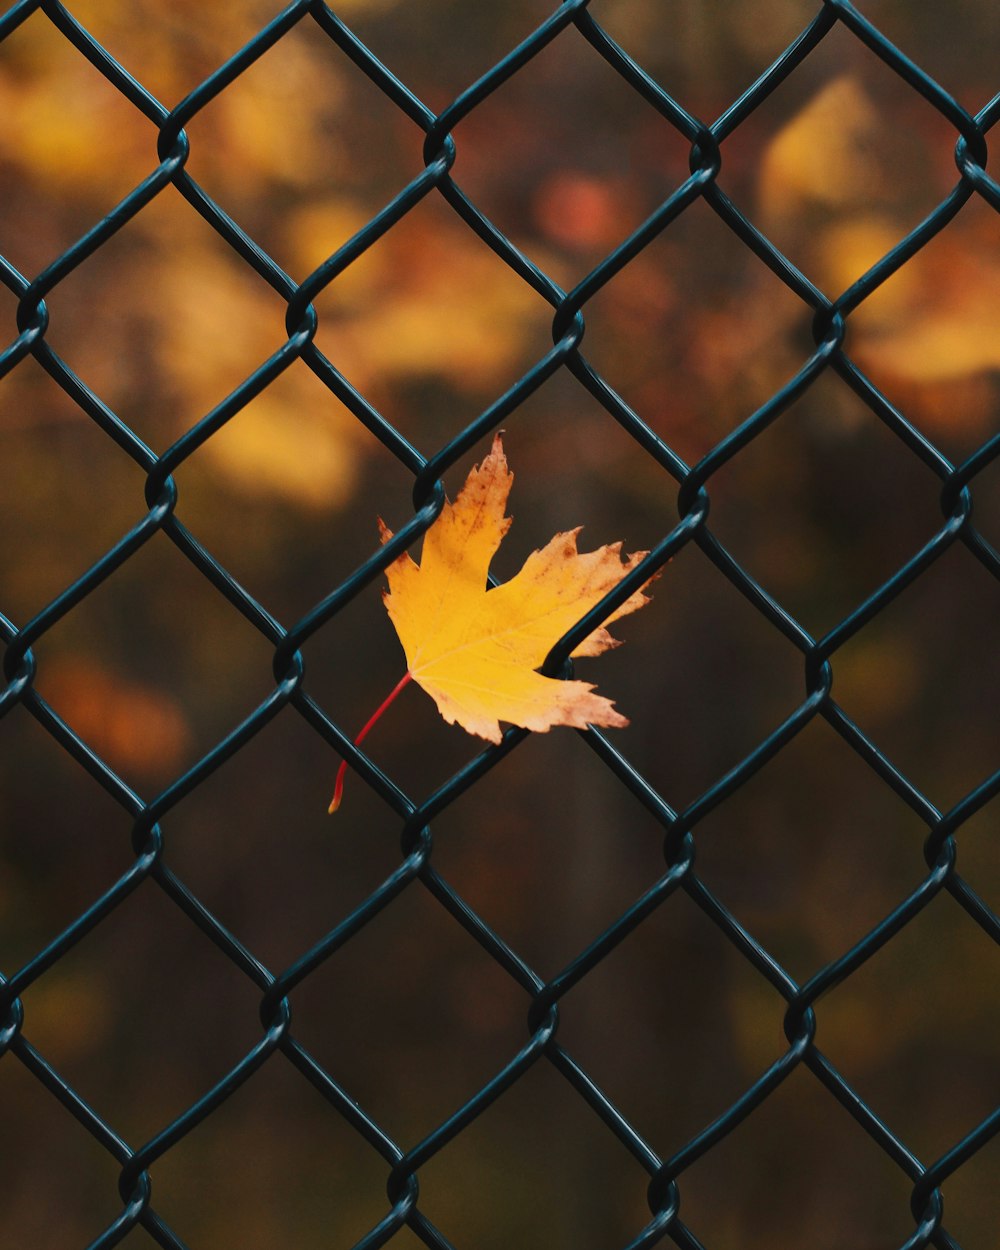 a single leaf on a chain link fence